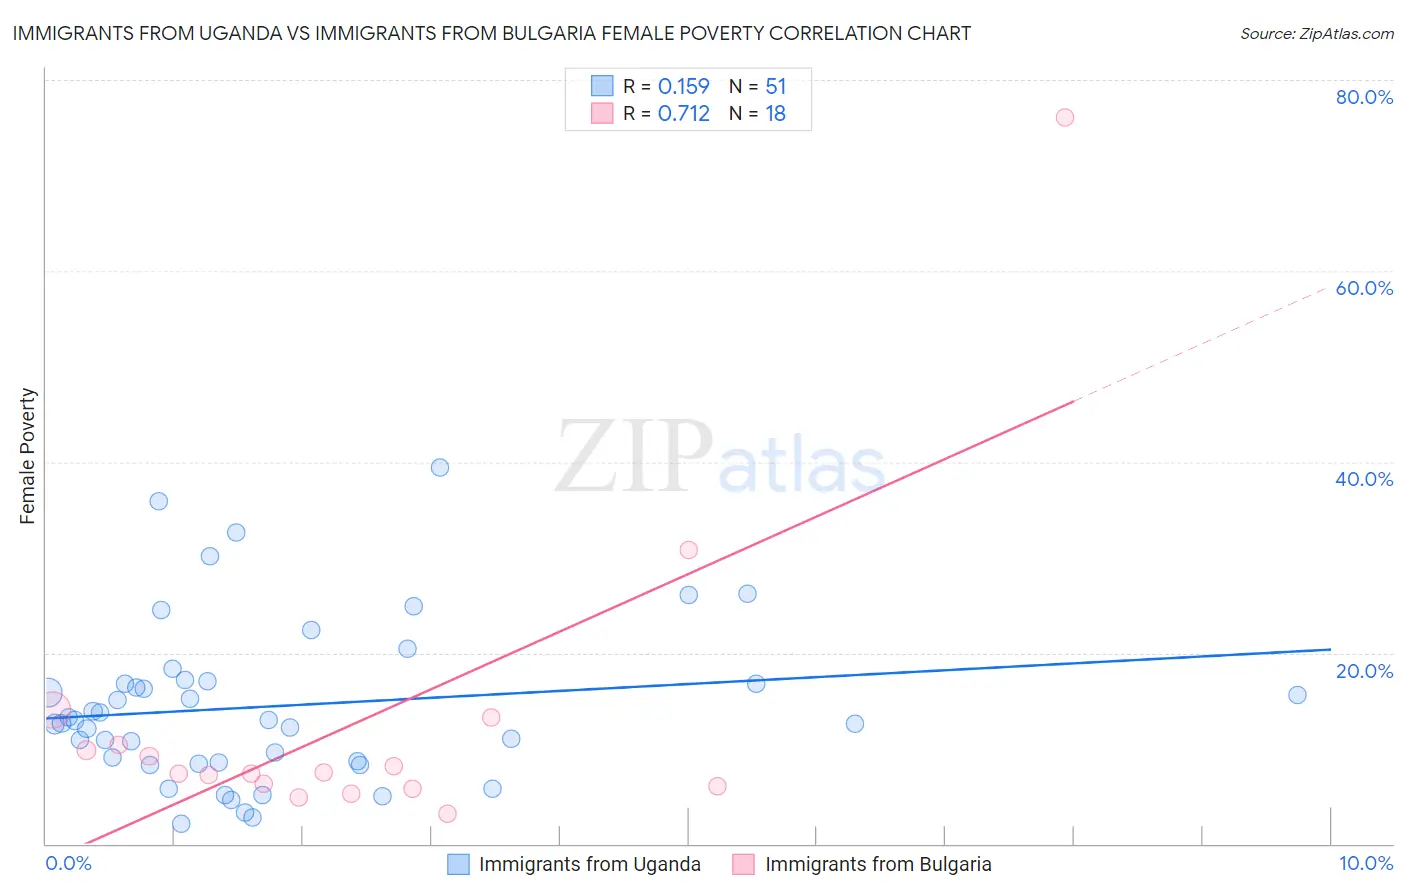 Immigrants from Uganda vs Immigrants from Bulgaria Female Poverty